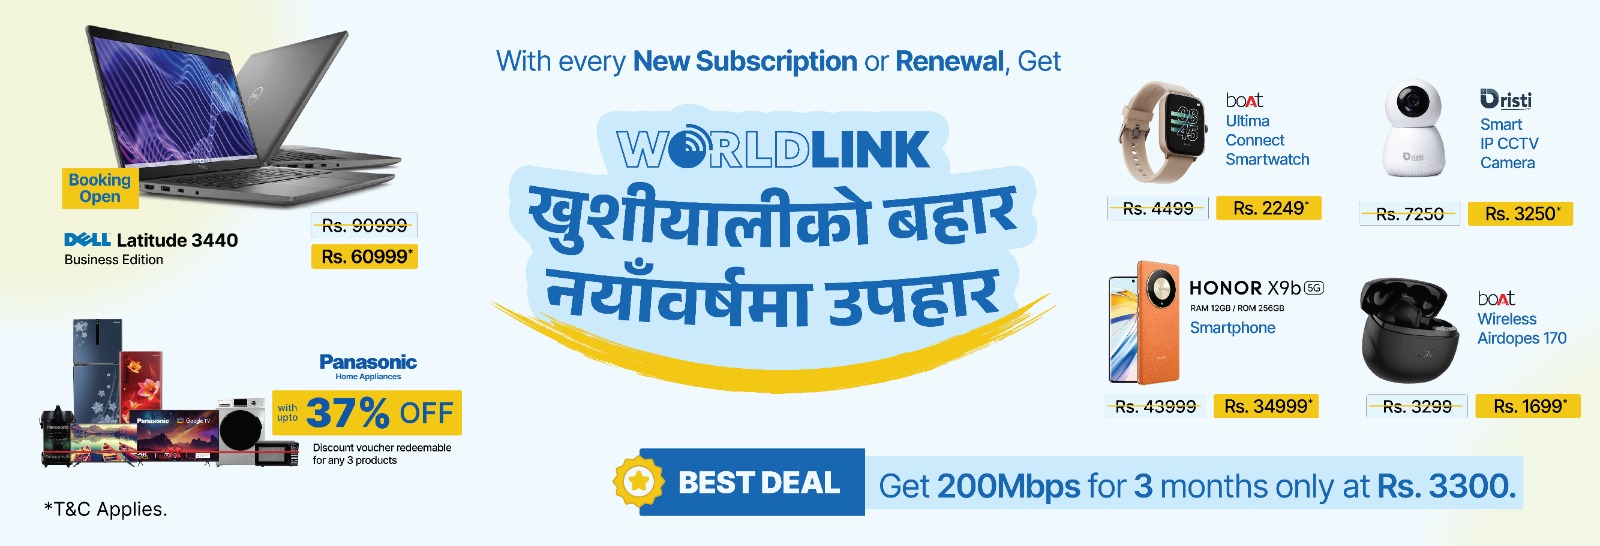 Worldlink new offer